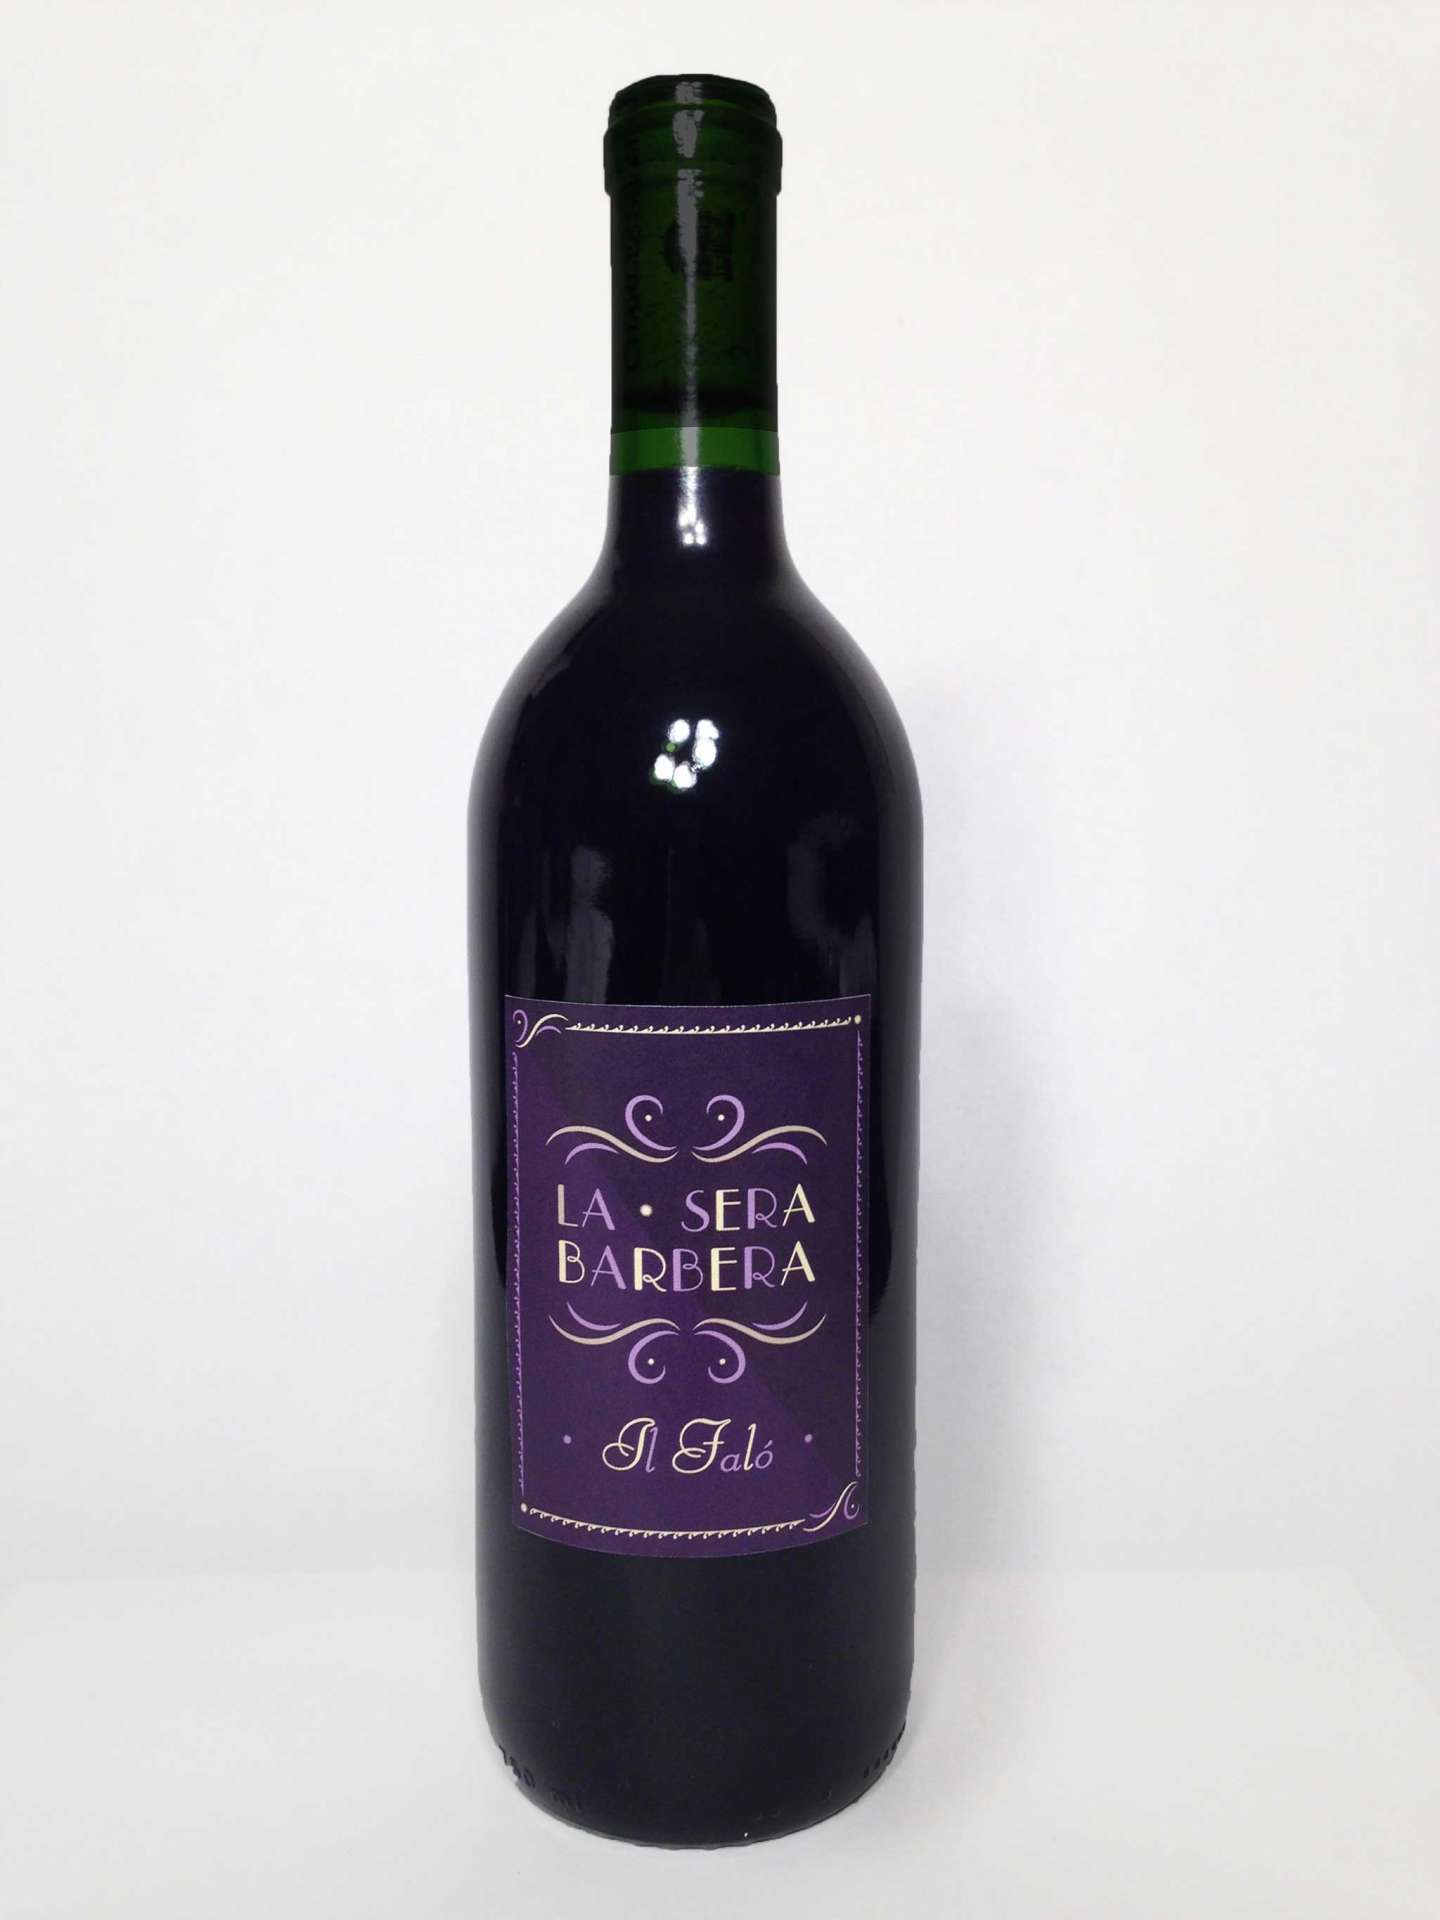 La Sera Barbera Wine Bottles